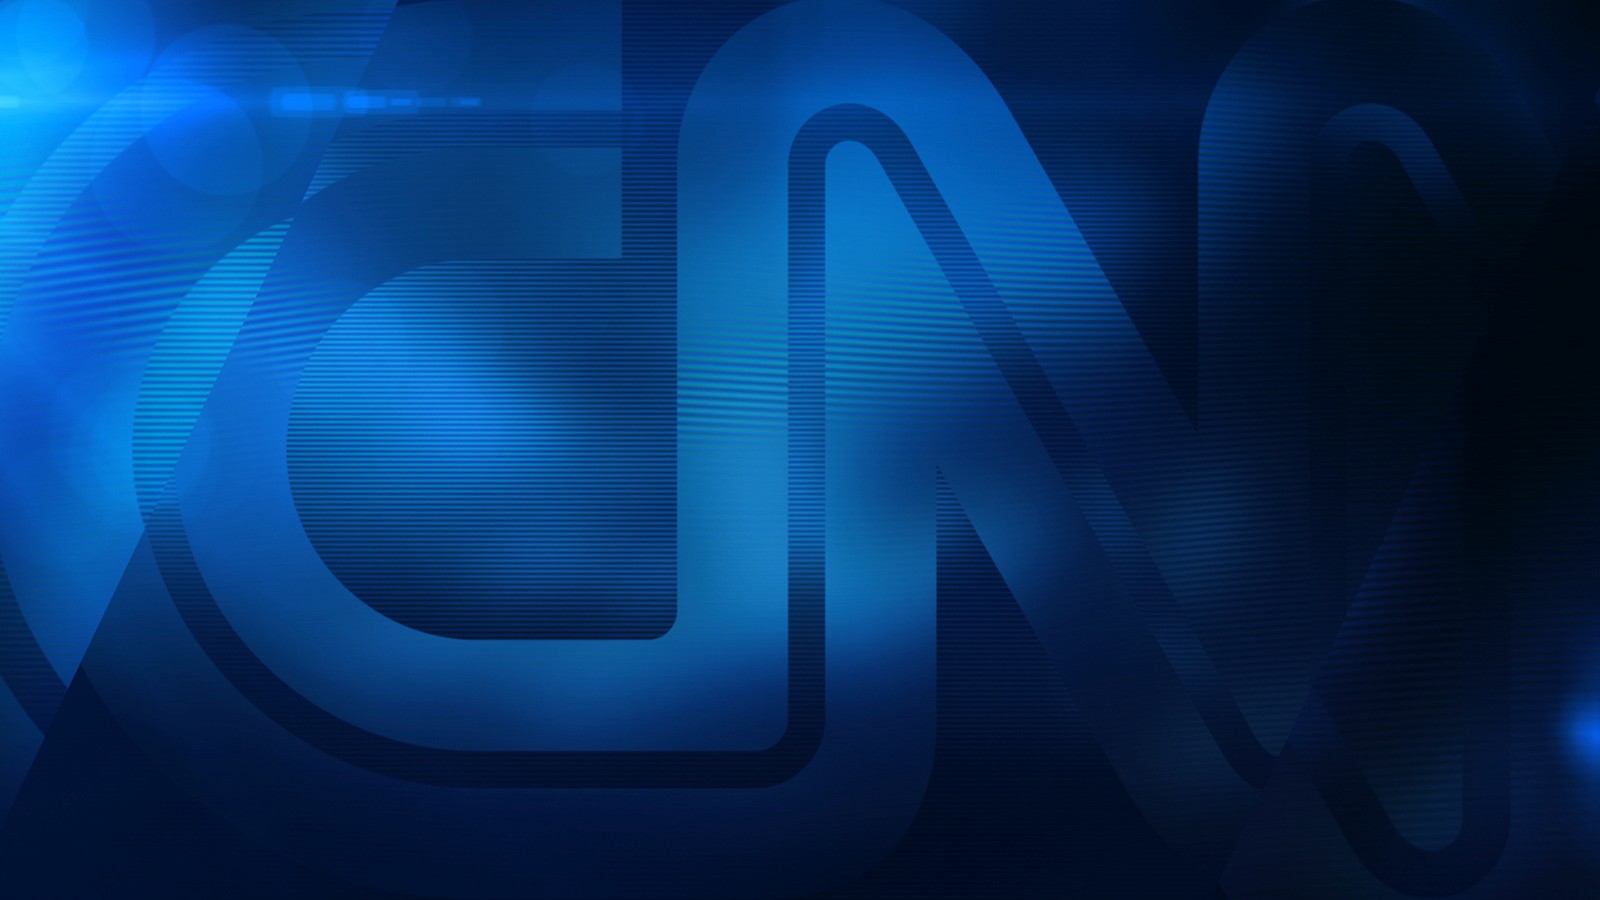 Gong Yoo on becoming South Korea's leading man - CNN